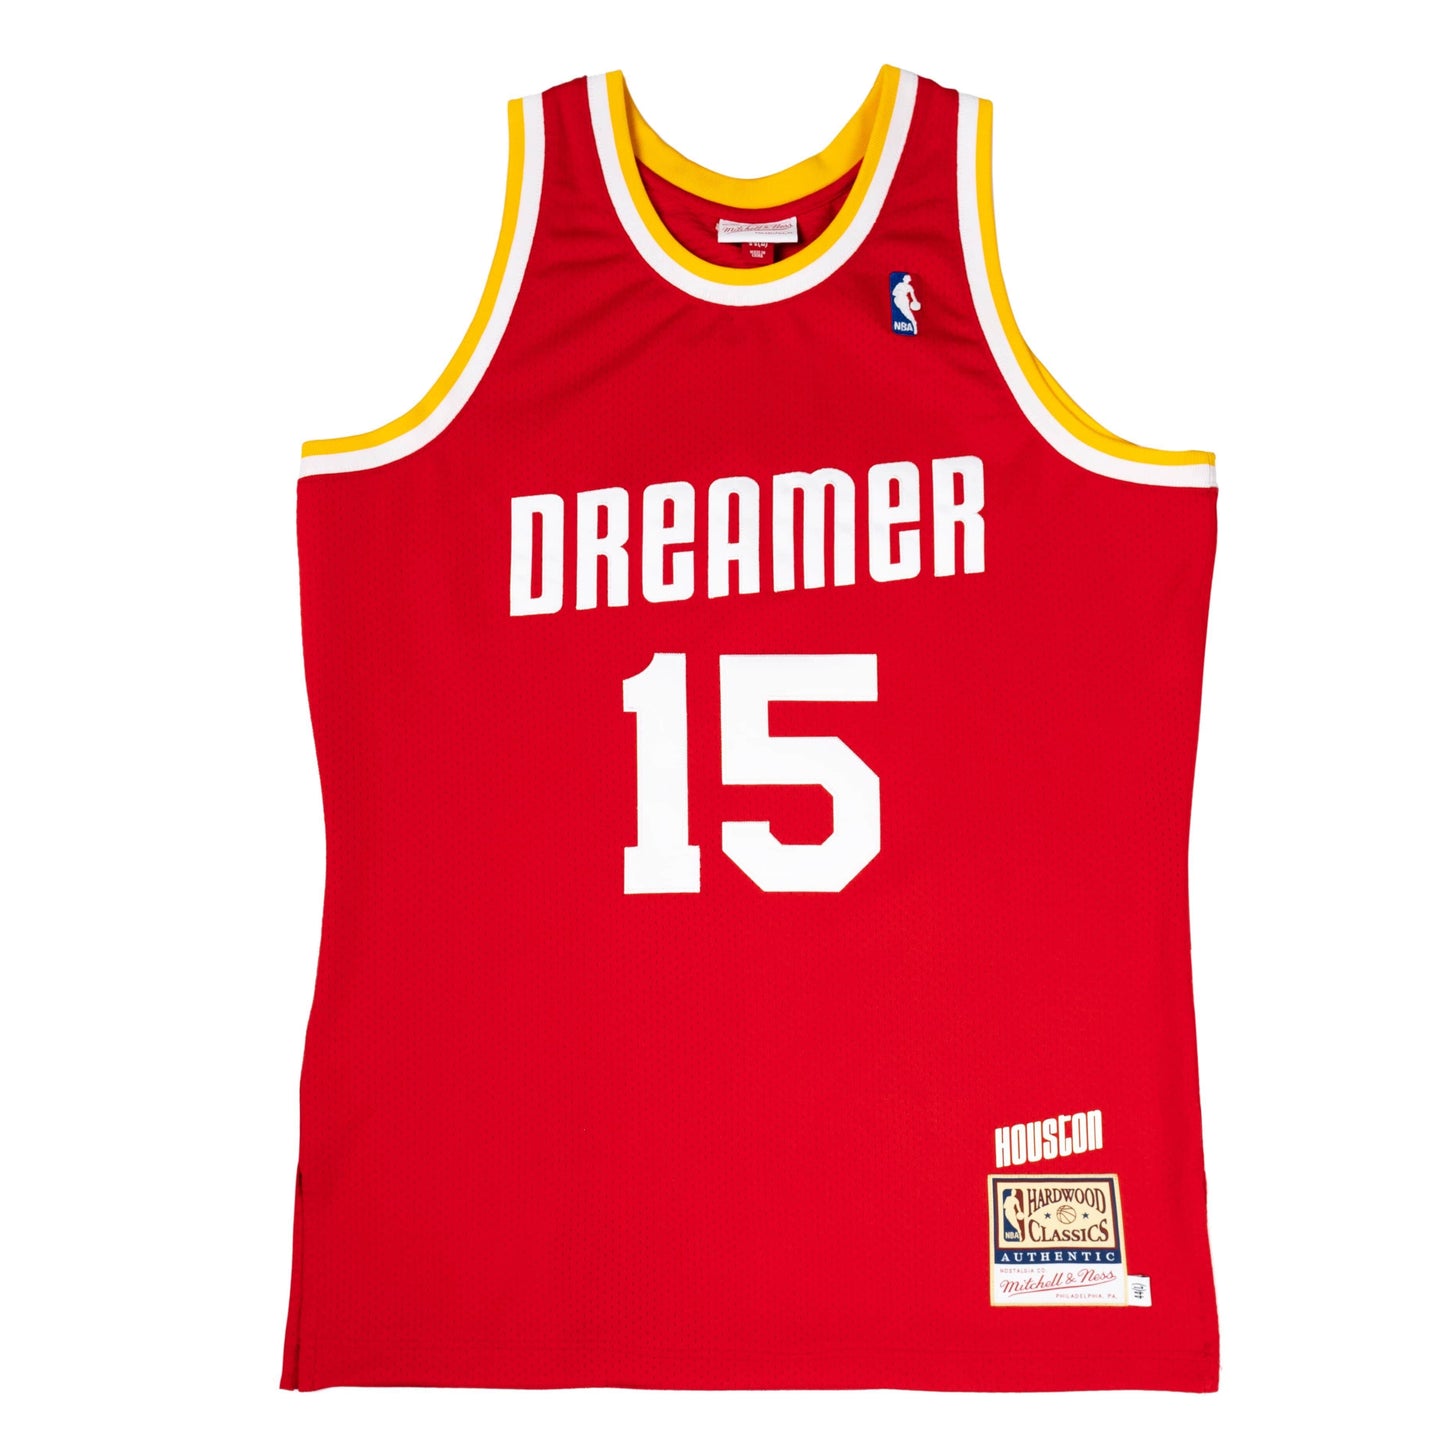 DREAMER x Mitchell & Ness Houston Rockets Jersey